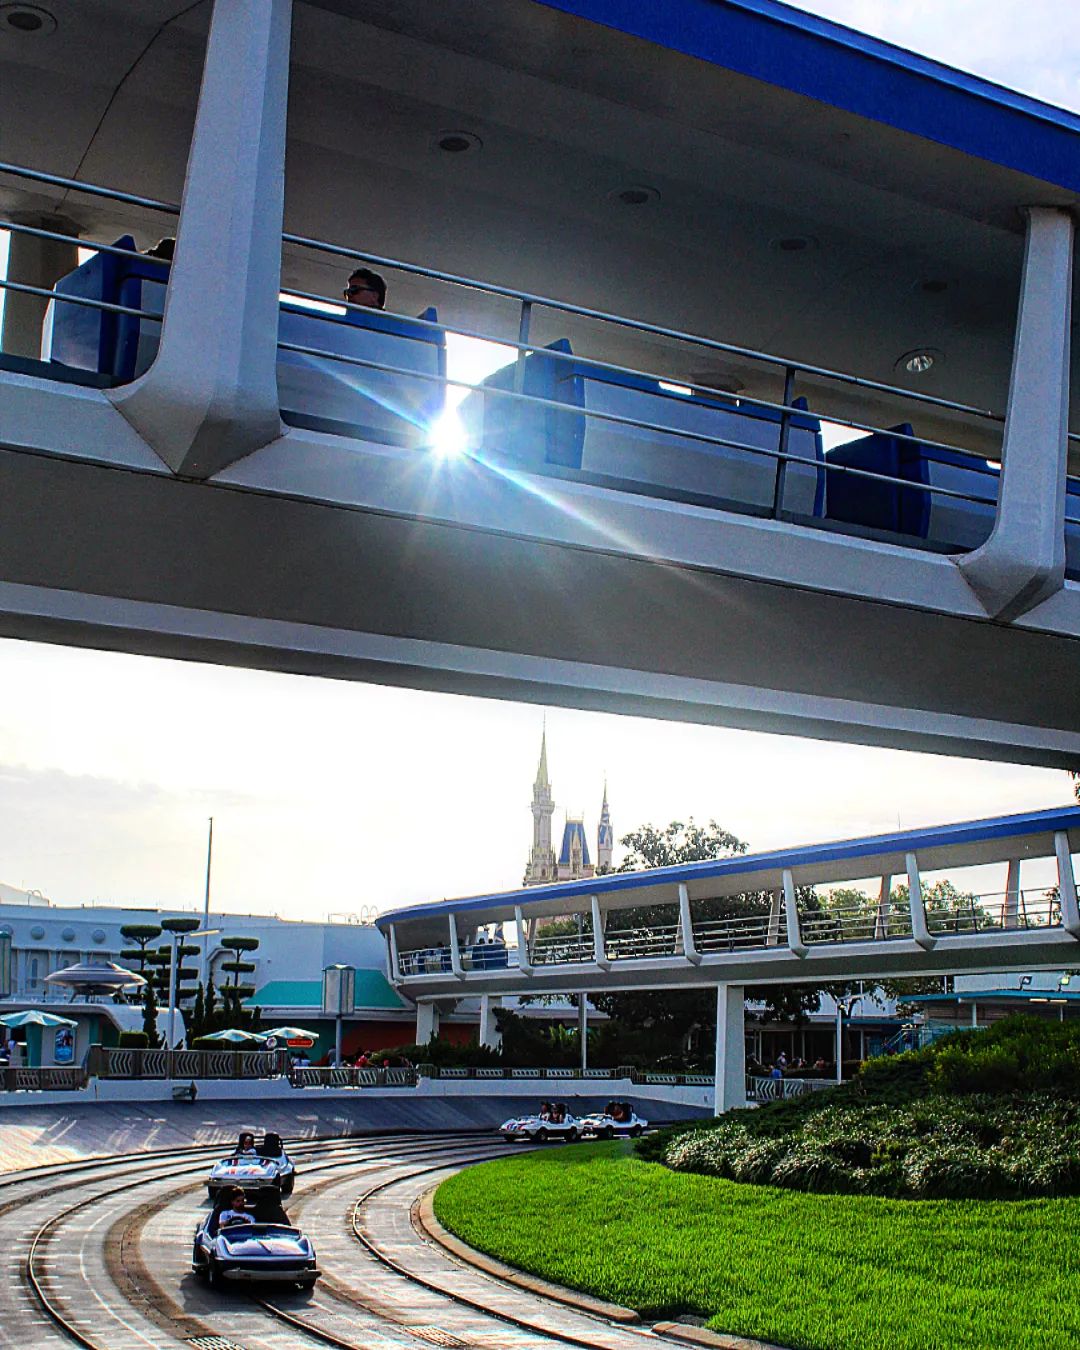 Tomorrowland - Reino Mágico en Walt Disney World